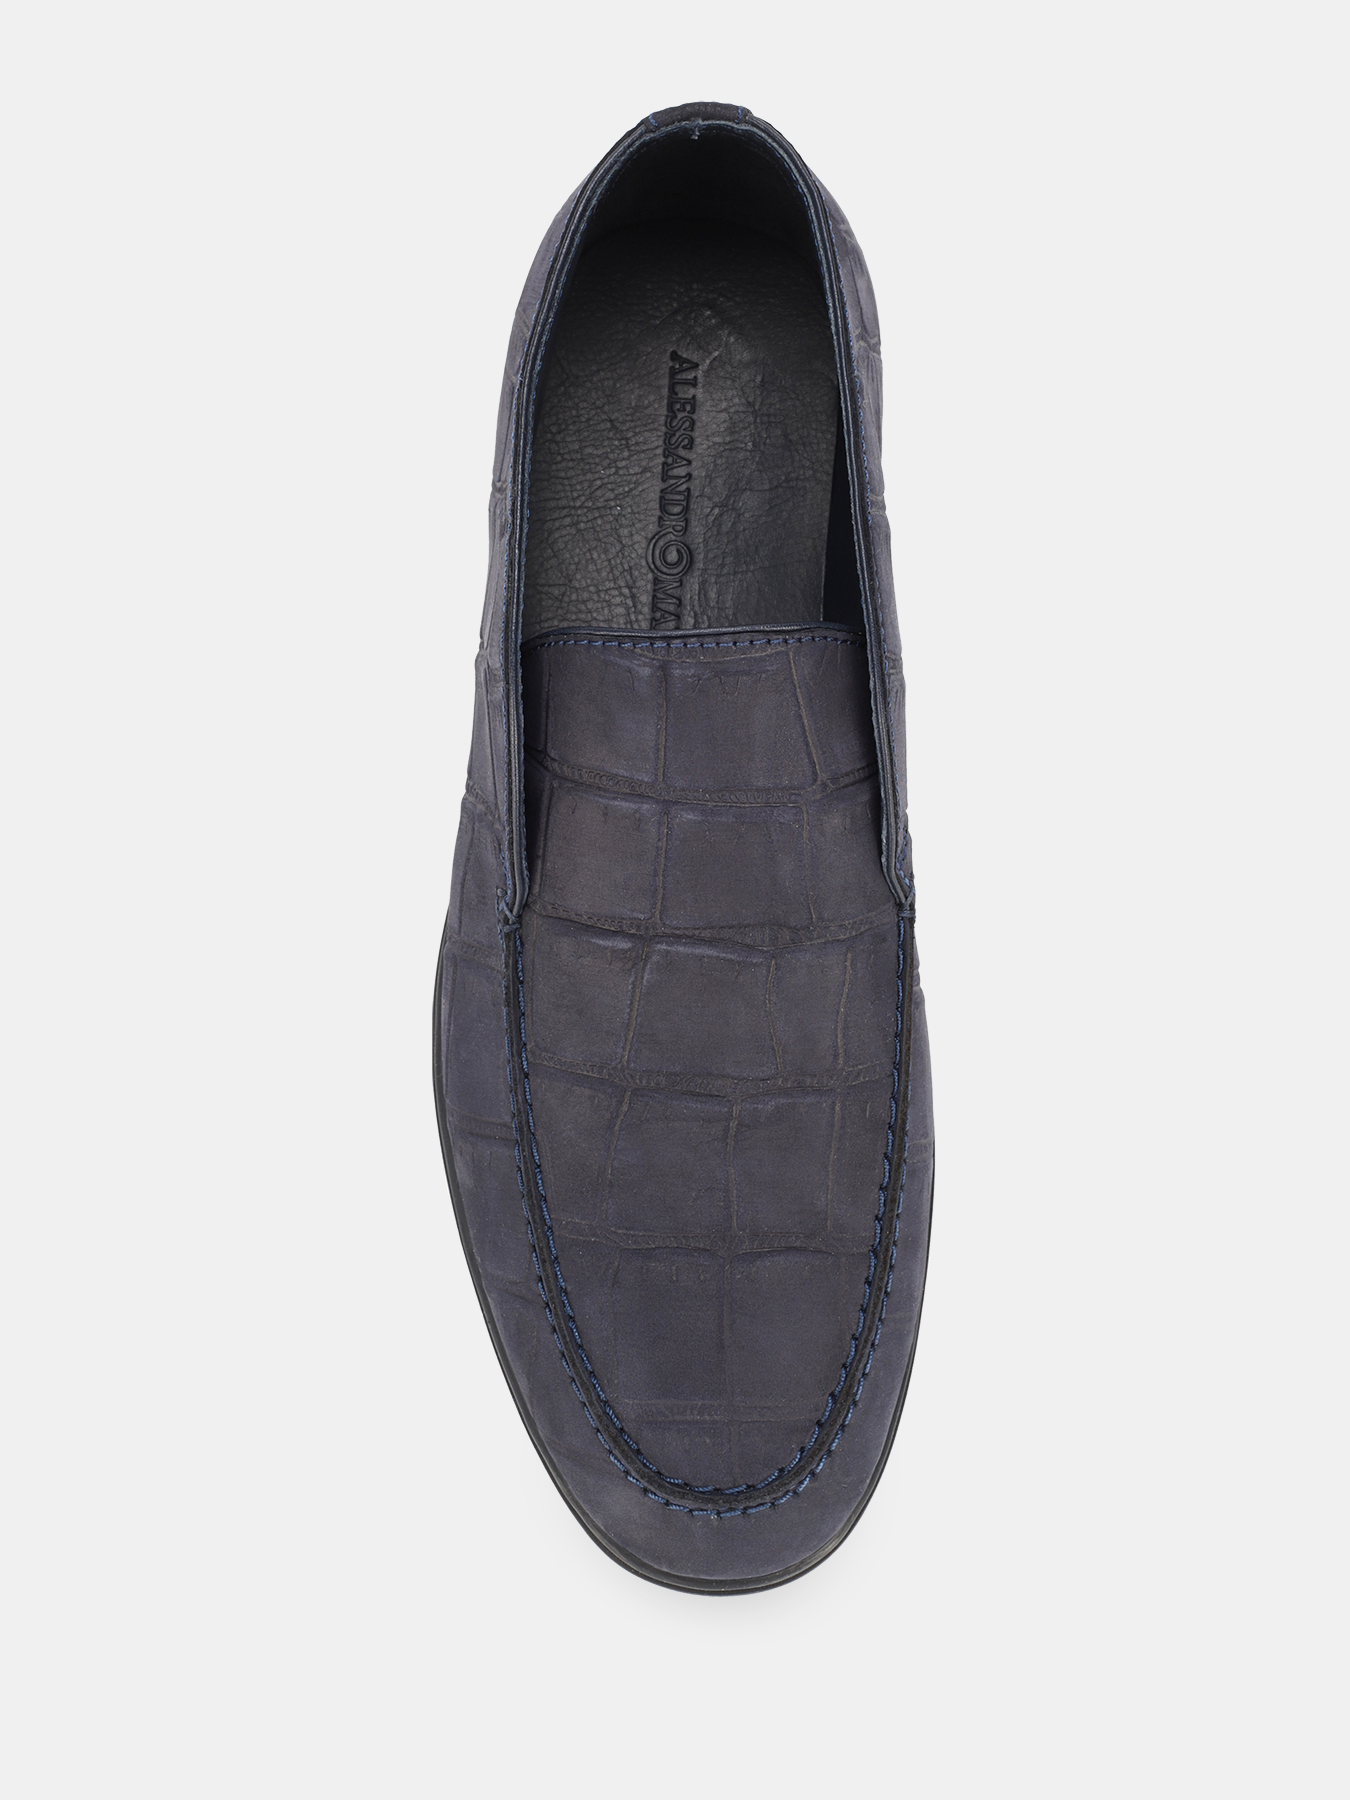 Ботинки Alessandro Manzoni 430184-050, цвет темно-синий, размер 41 - фото 4